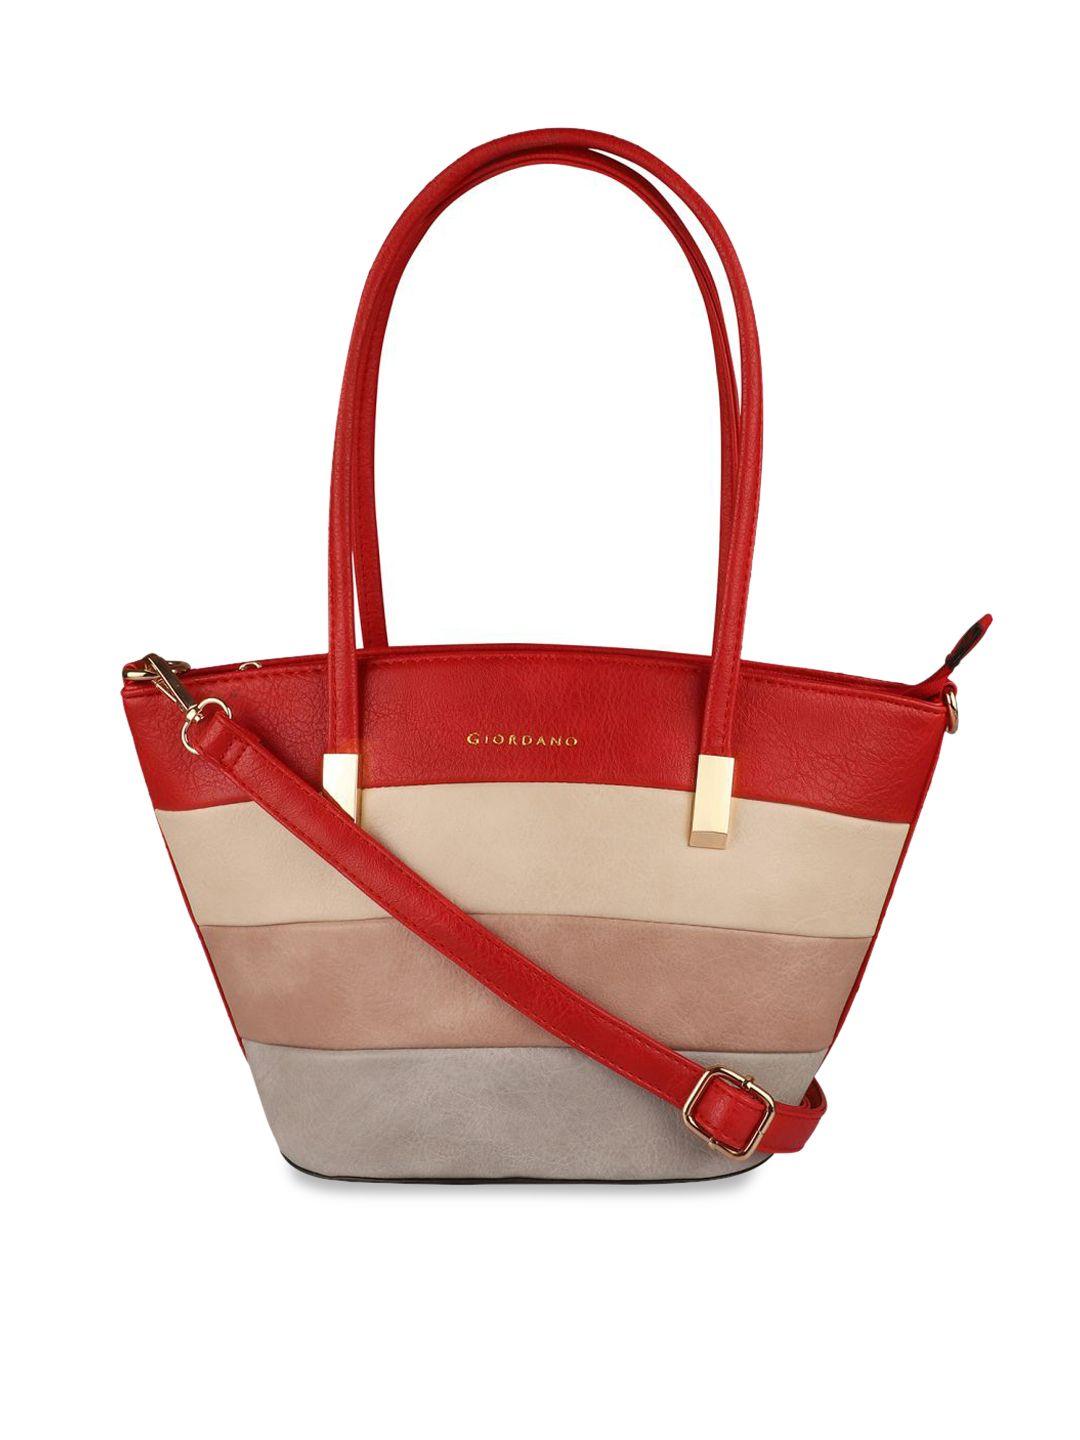 giordano red & beige colourblocked shoulder bag